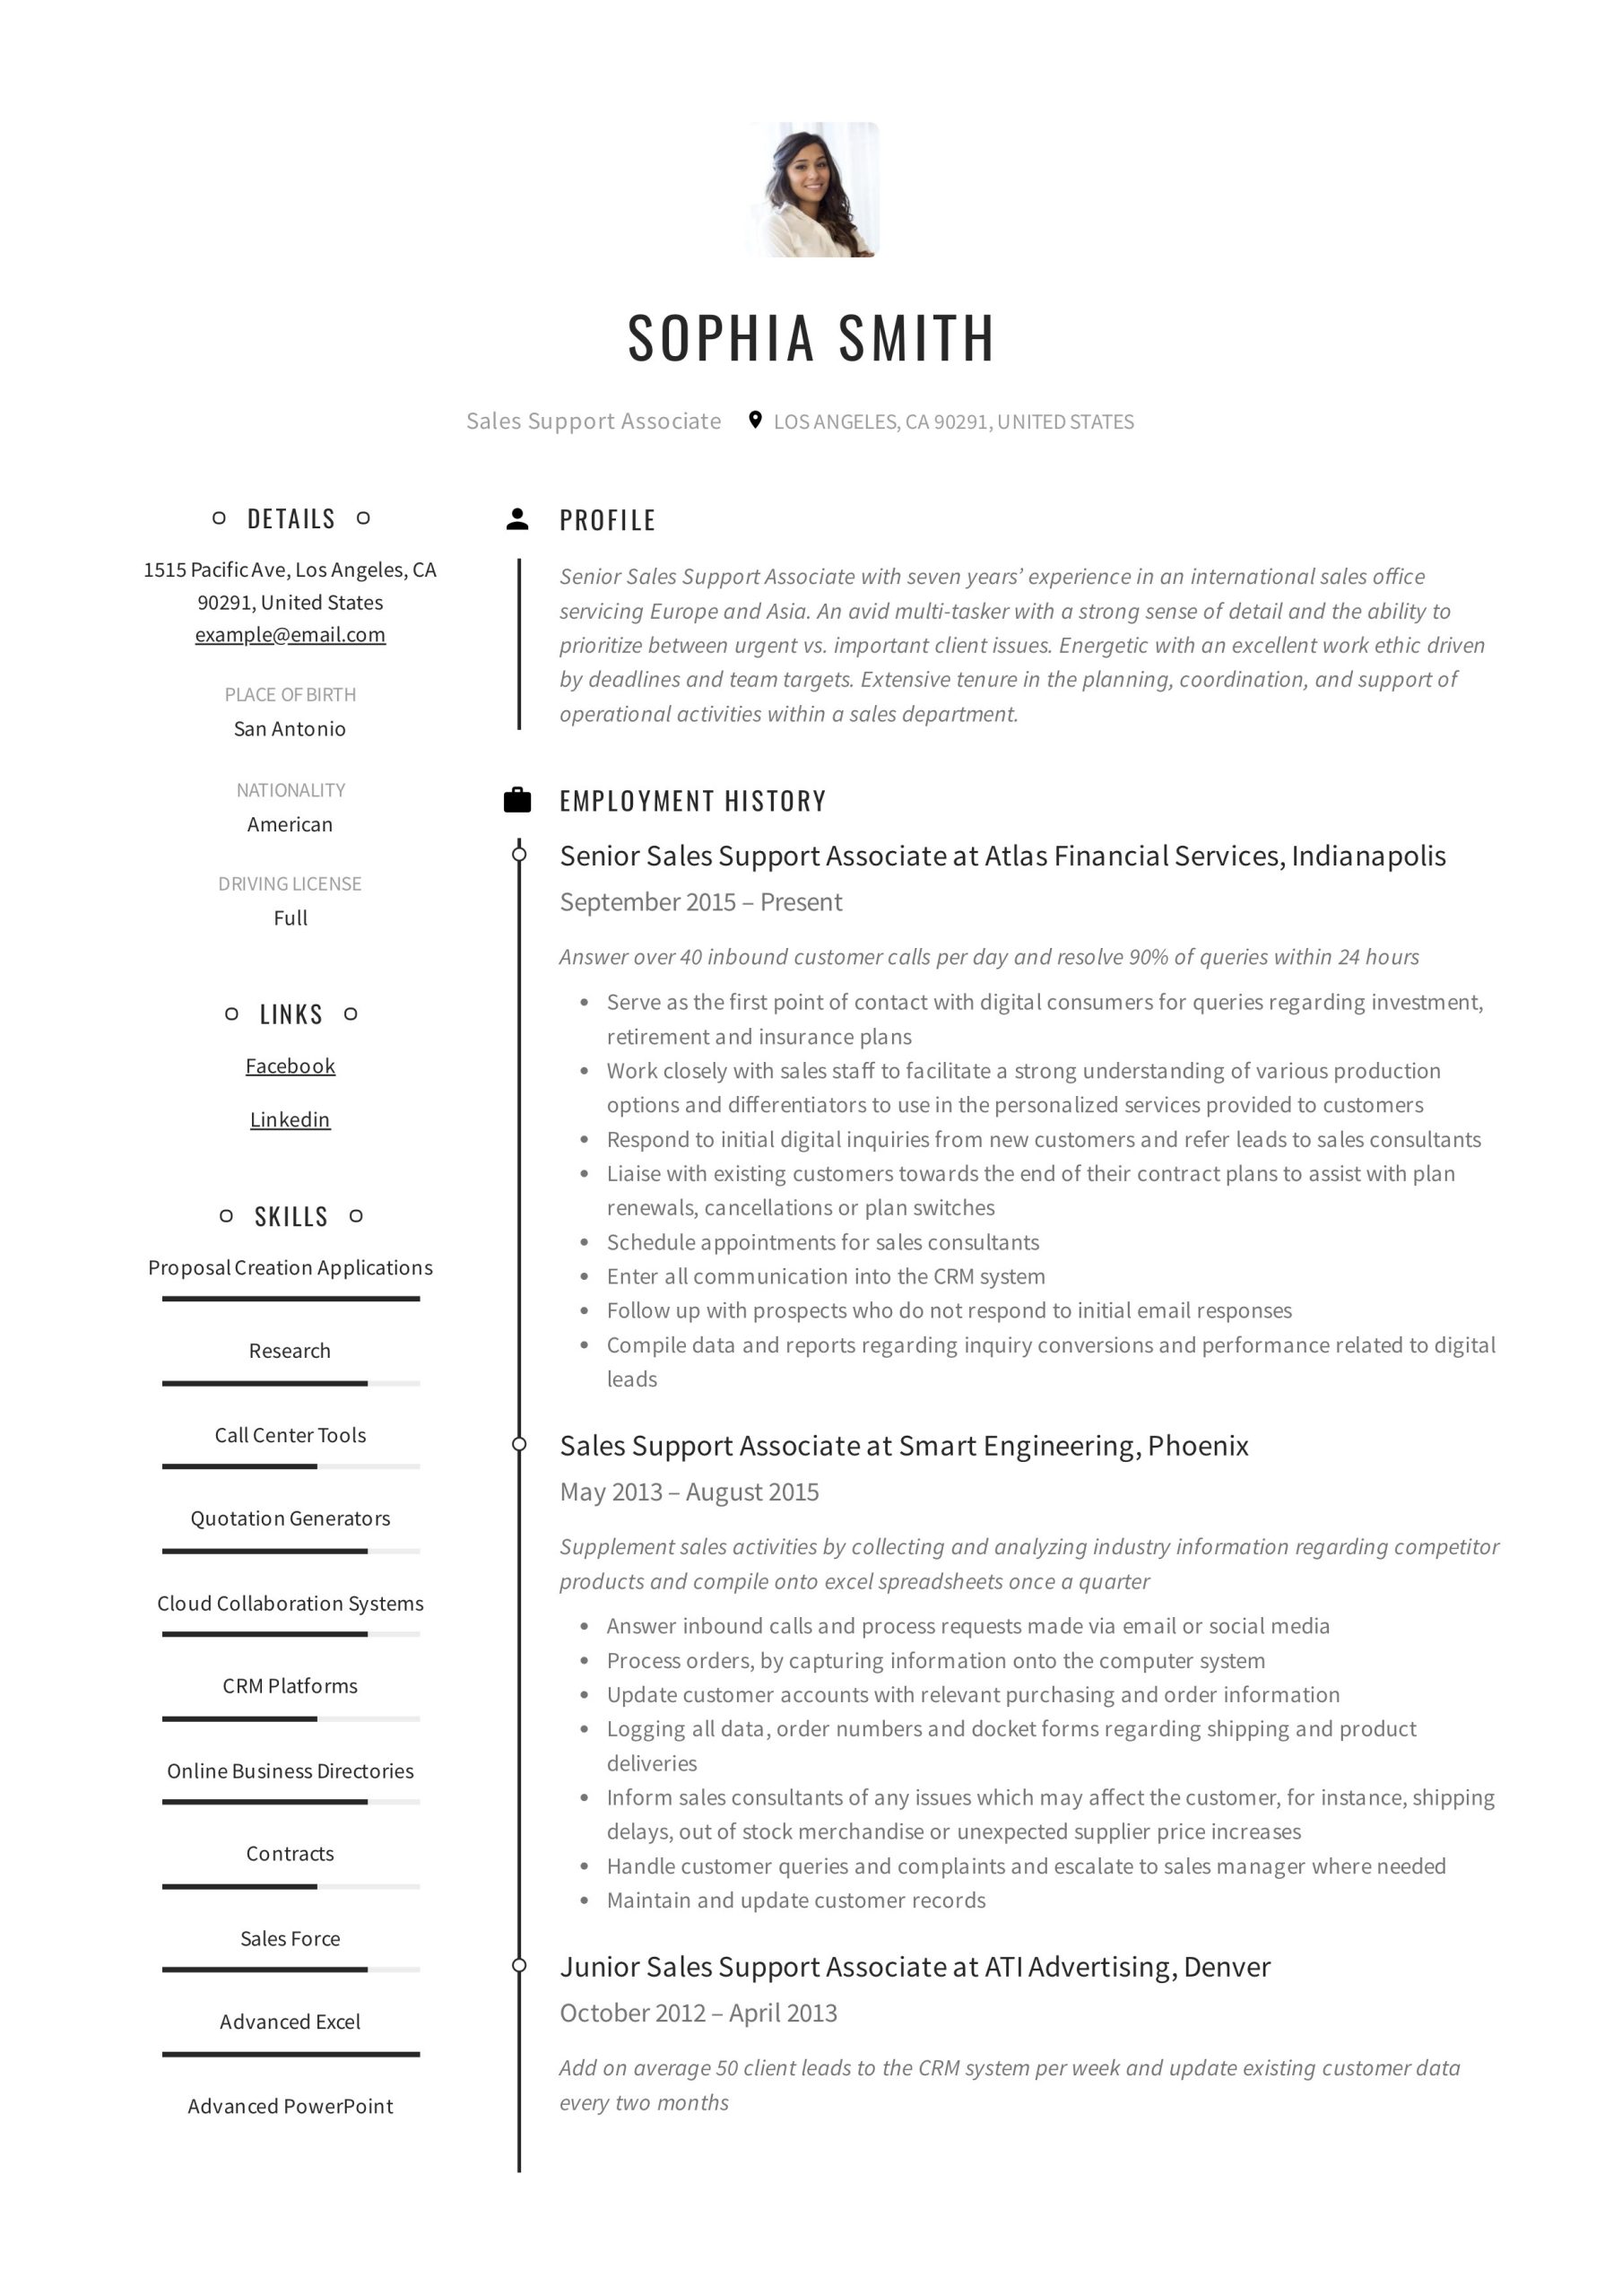 Sales Support Engineer Job Resume Sample Sales Support associate Resume & Guide  12 Resume Examples 2020